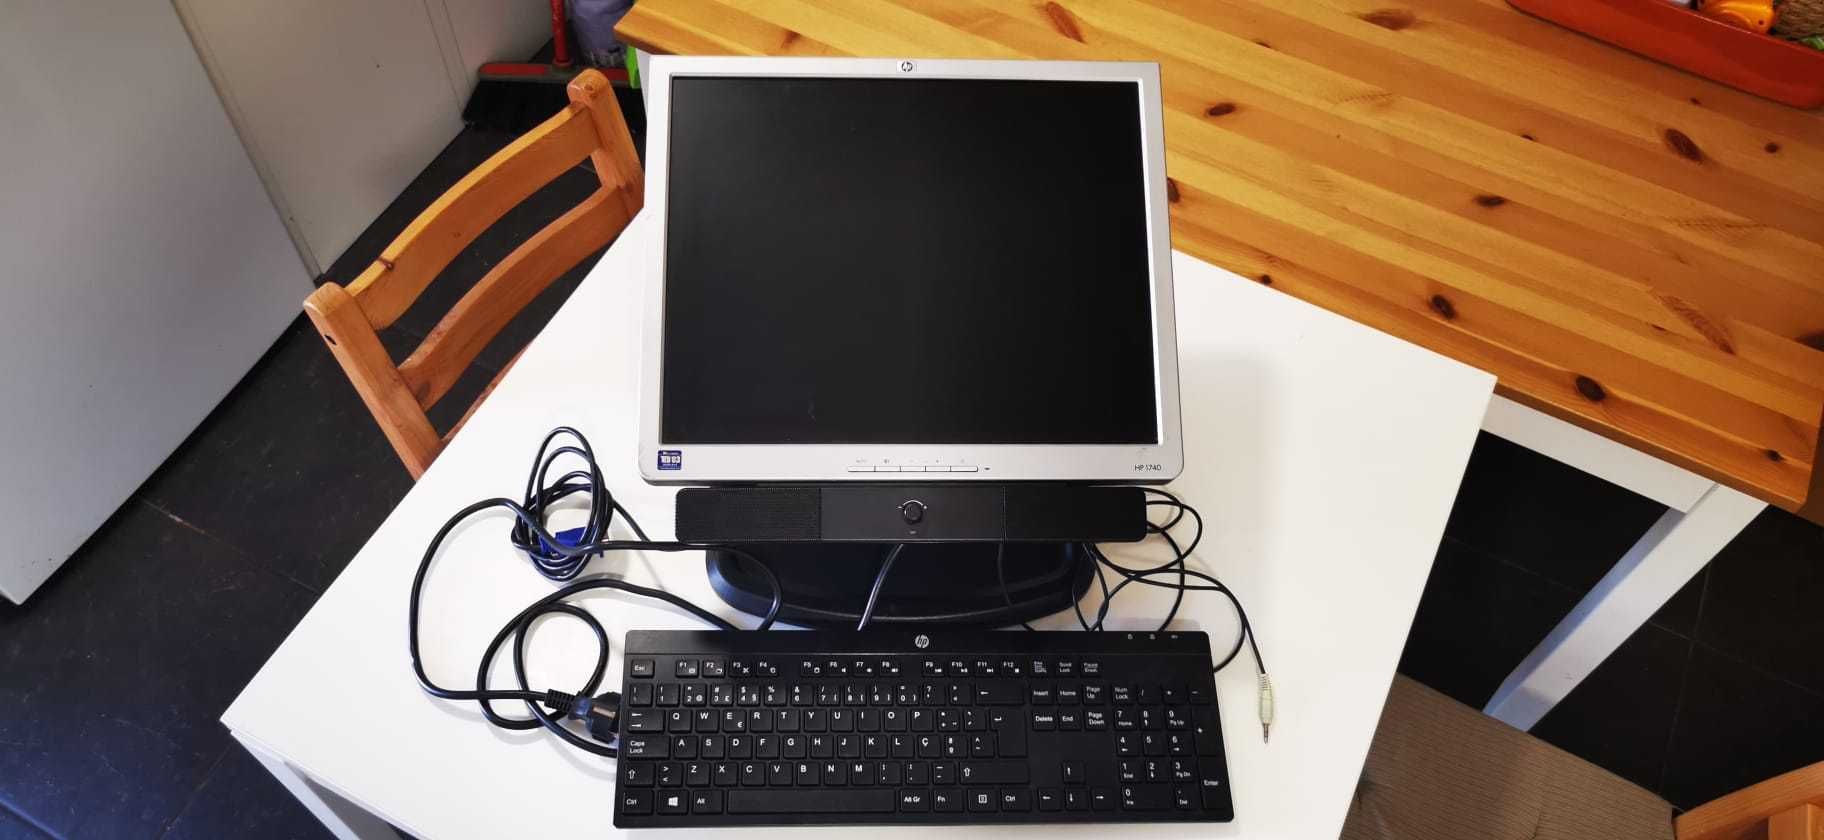 Monitor HP 1740 Usado com teclado